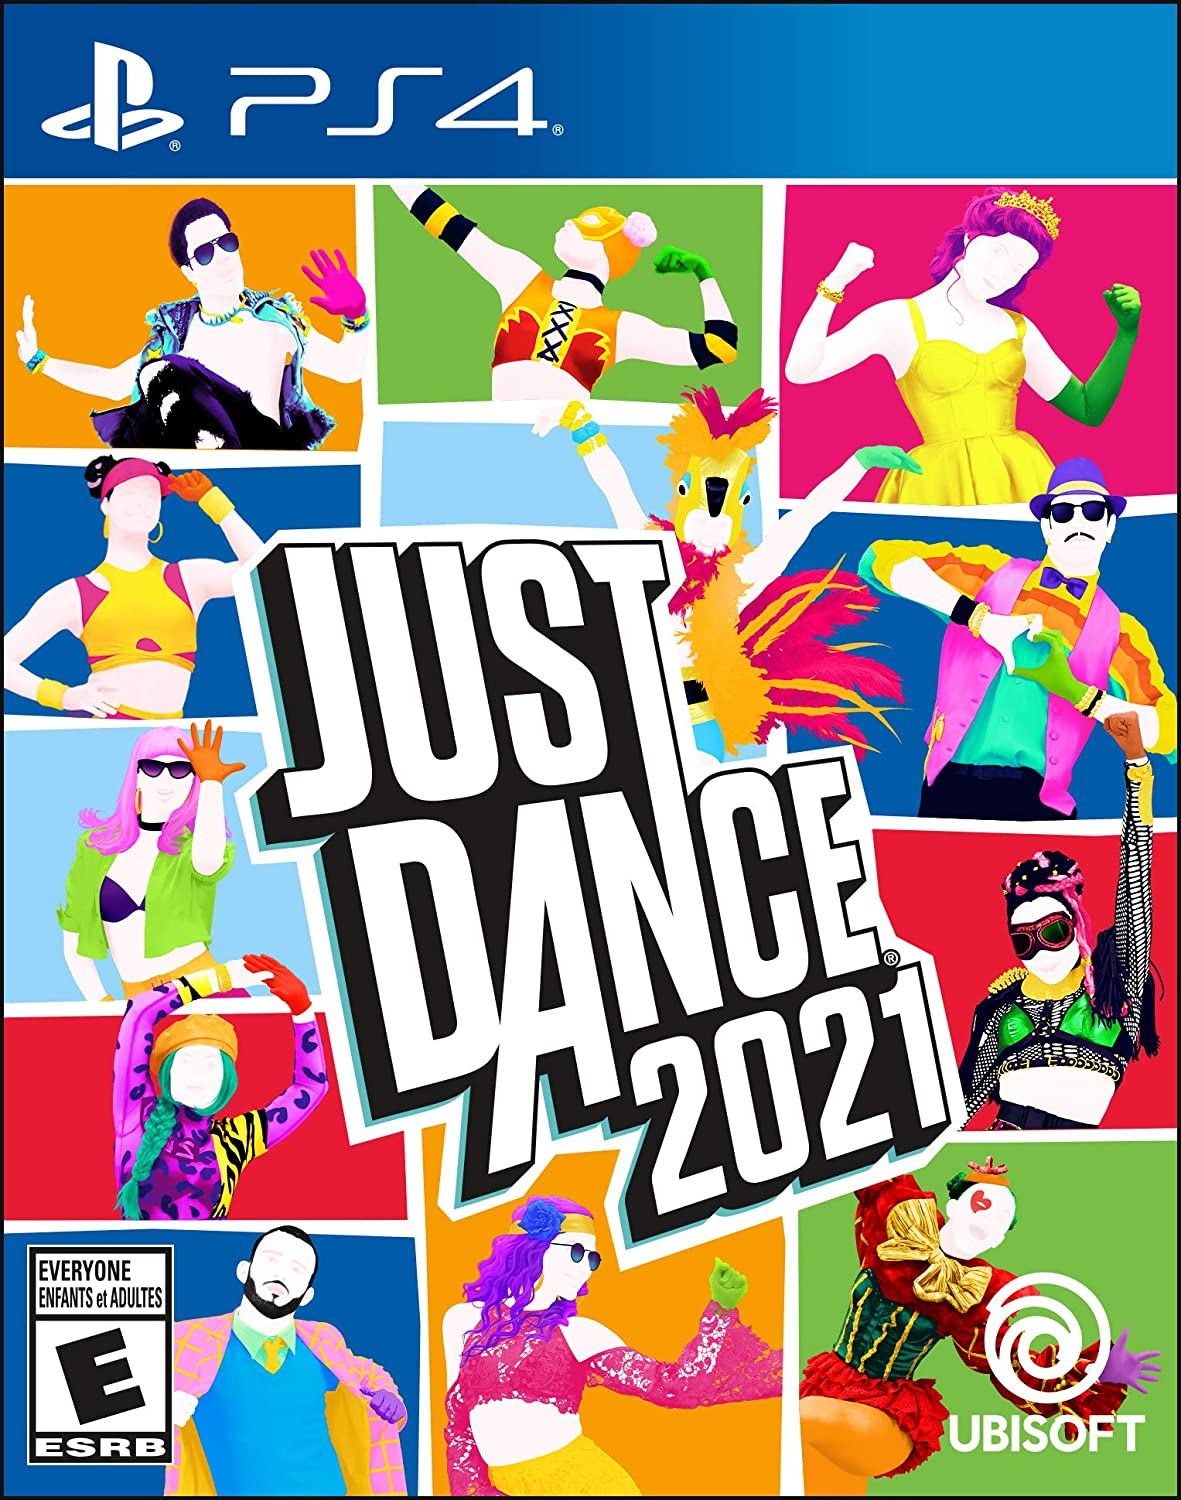 Just Dance 2021 Para Ps4